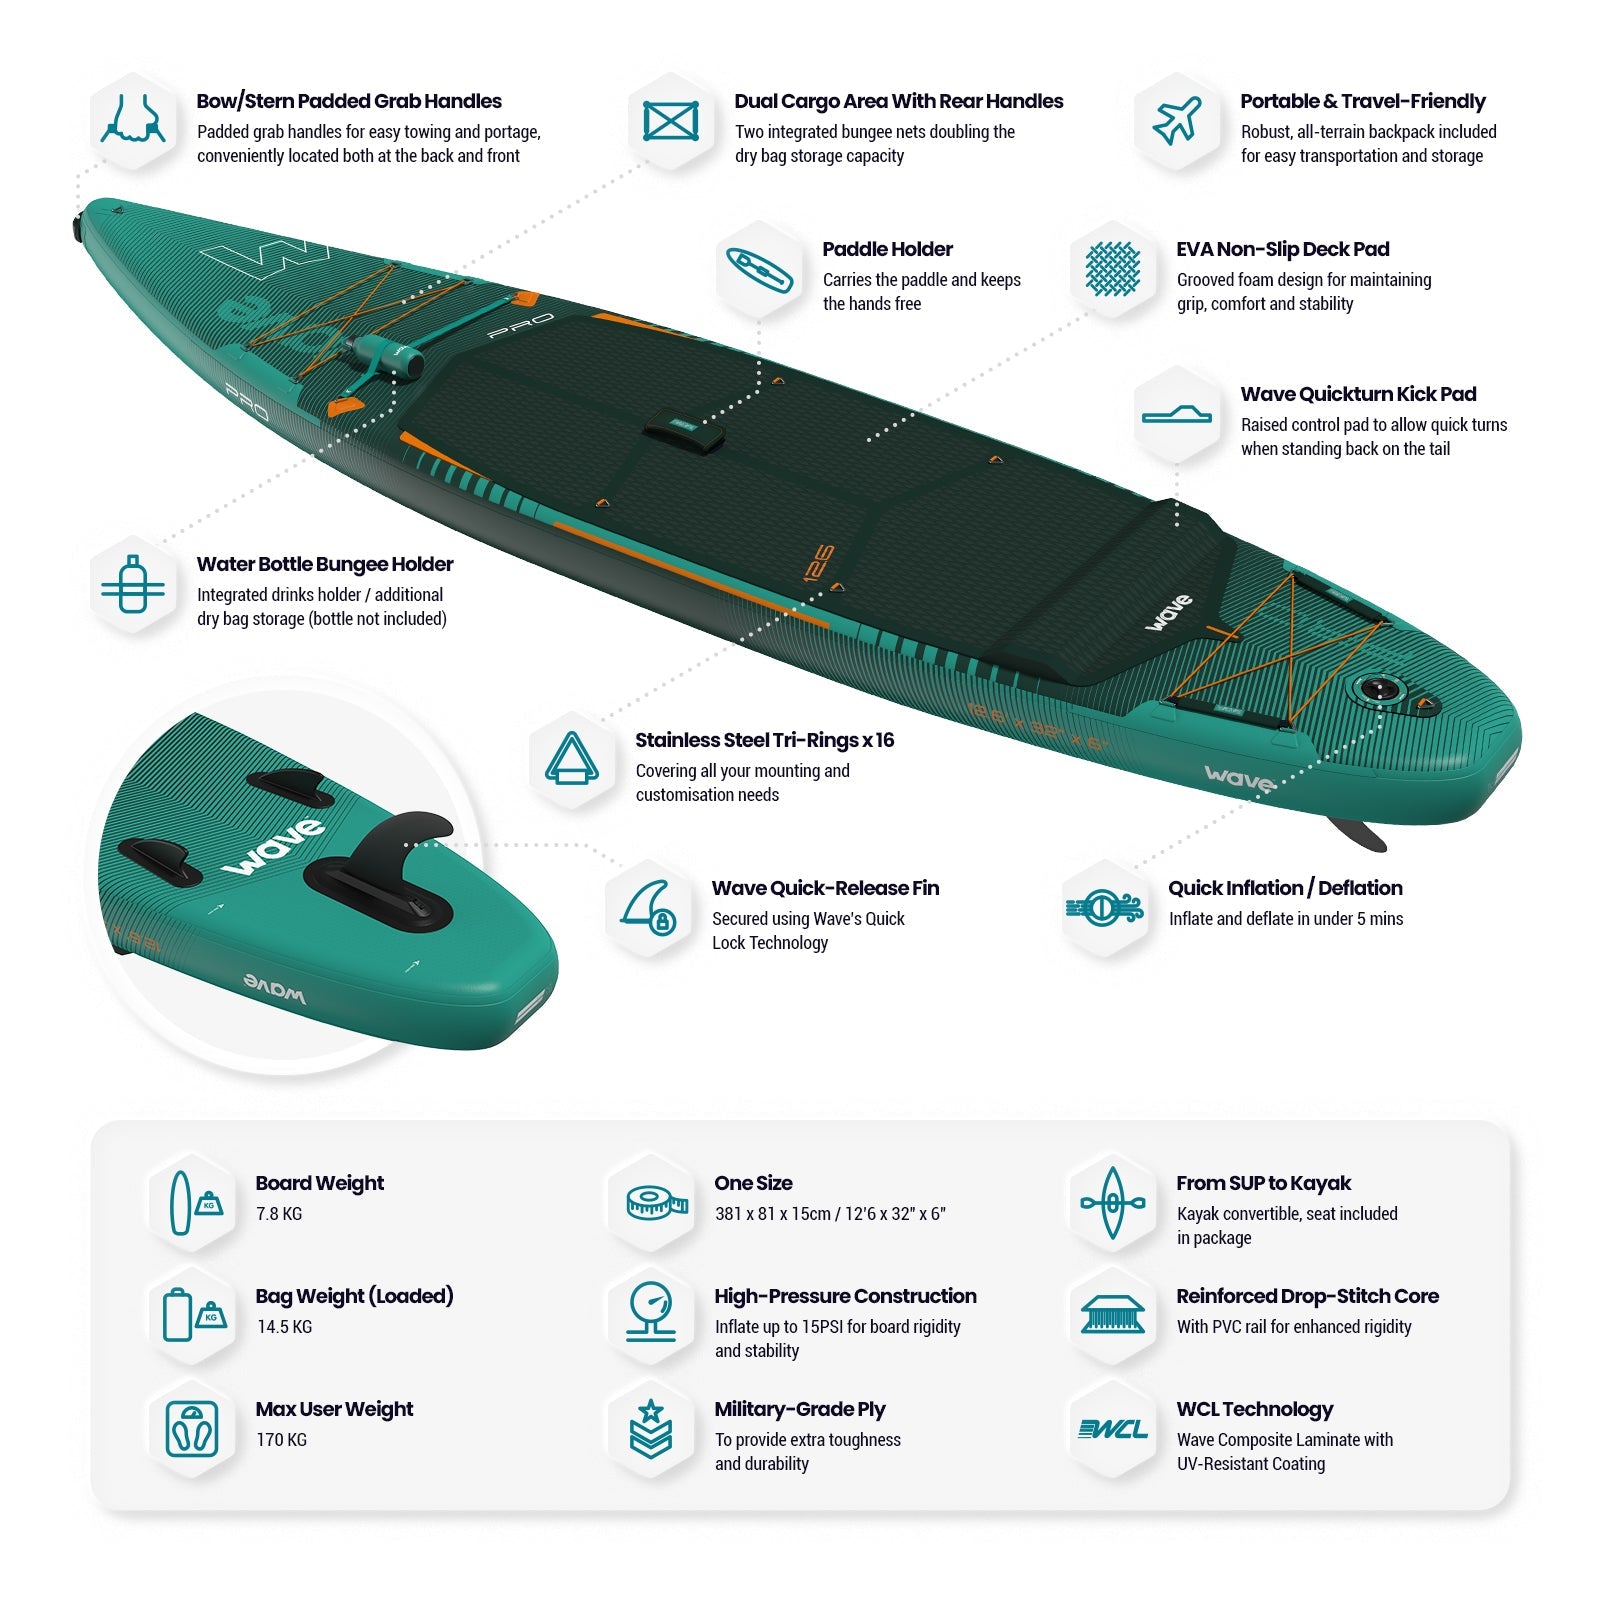 Pro 2.0 SUP | Inflatable Paddleboard | 12'6ft | Teal - Wave Sups EU